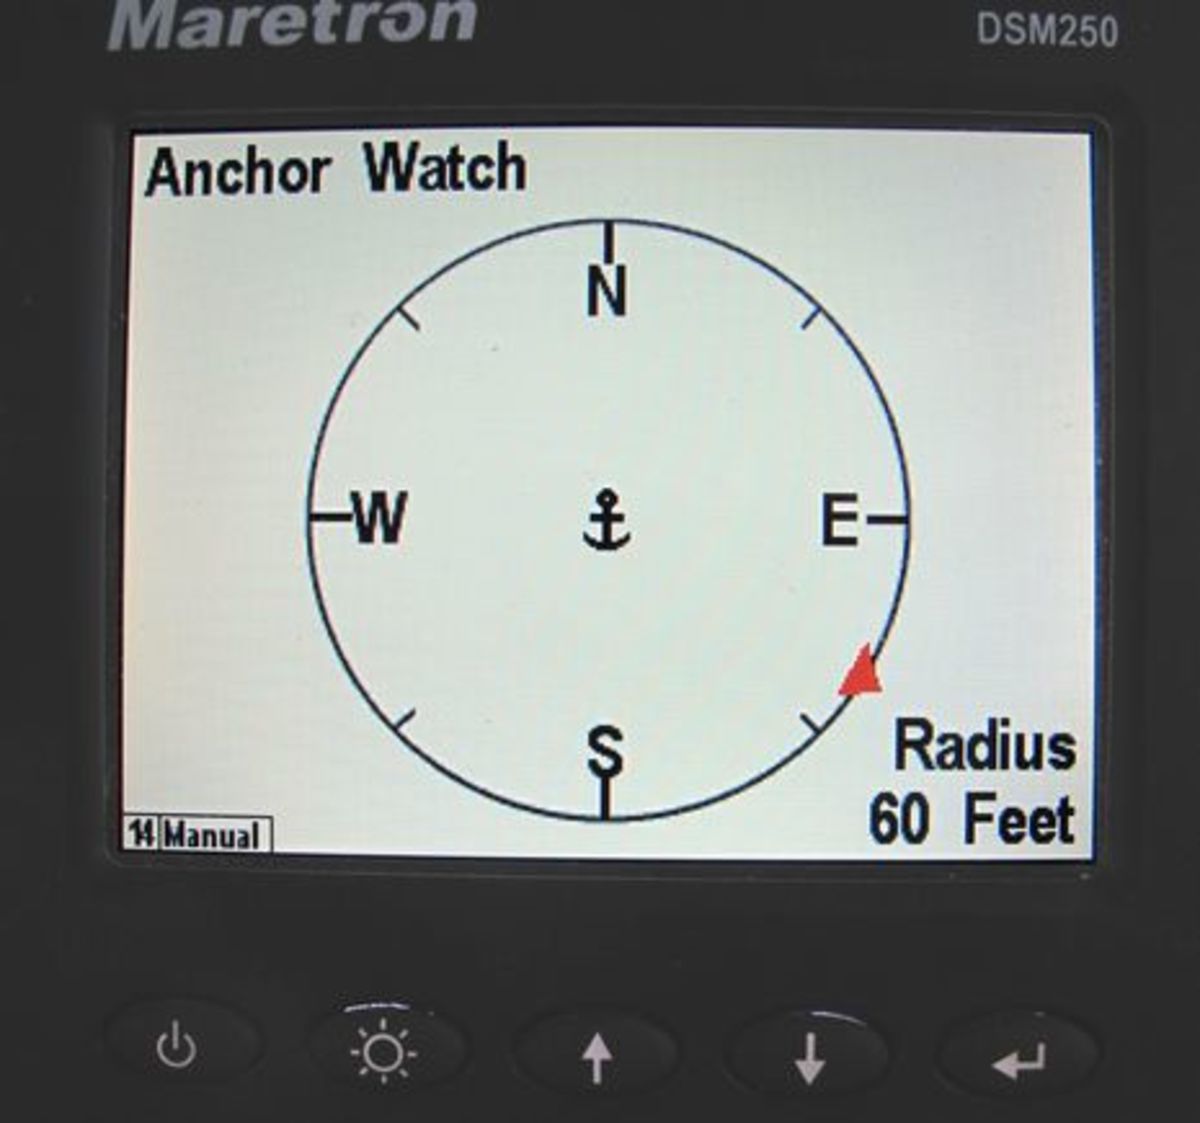 Mar etron_DSM250_Anchor_Alarm__cPanbo.jpg